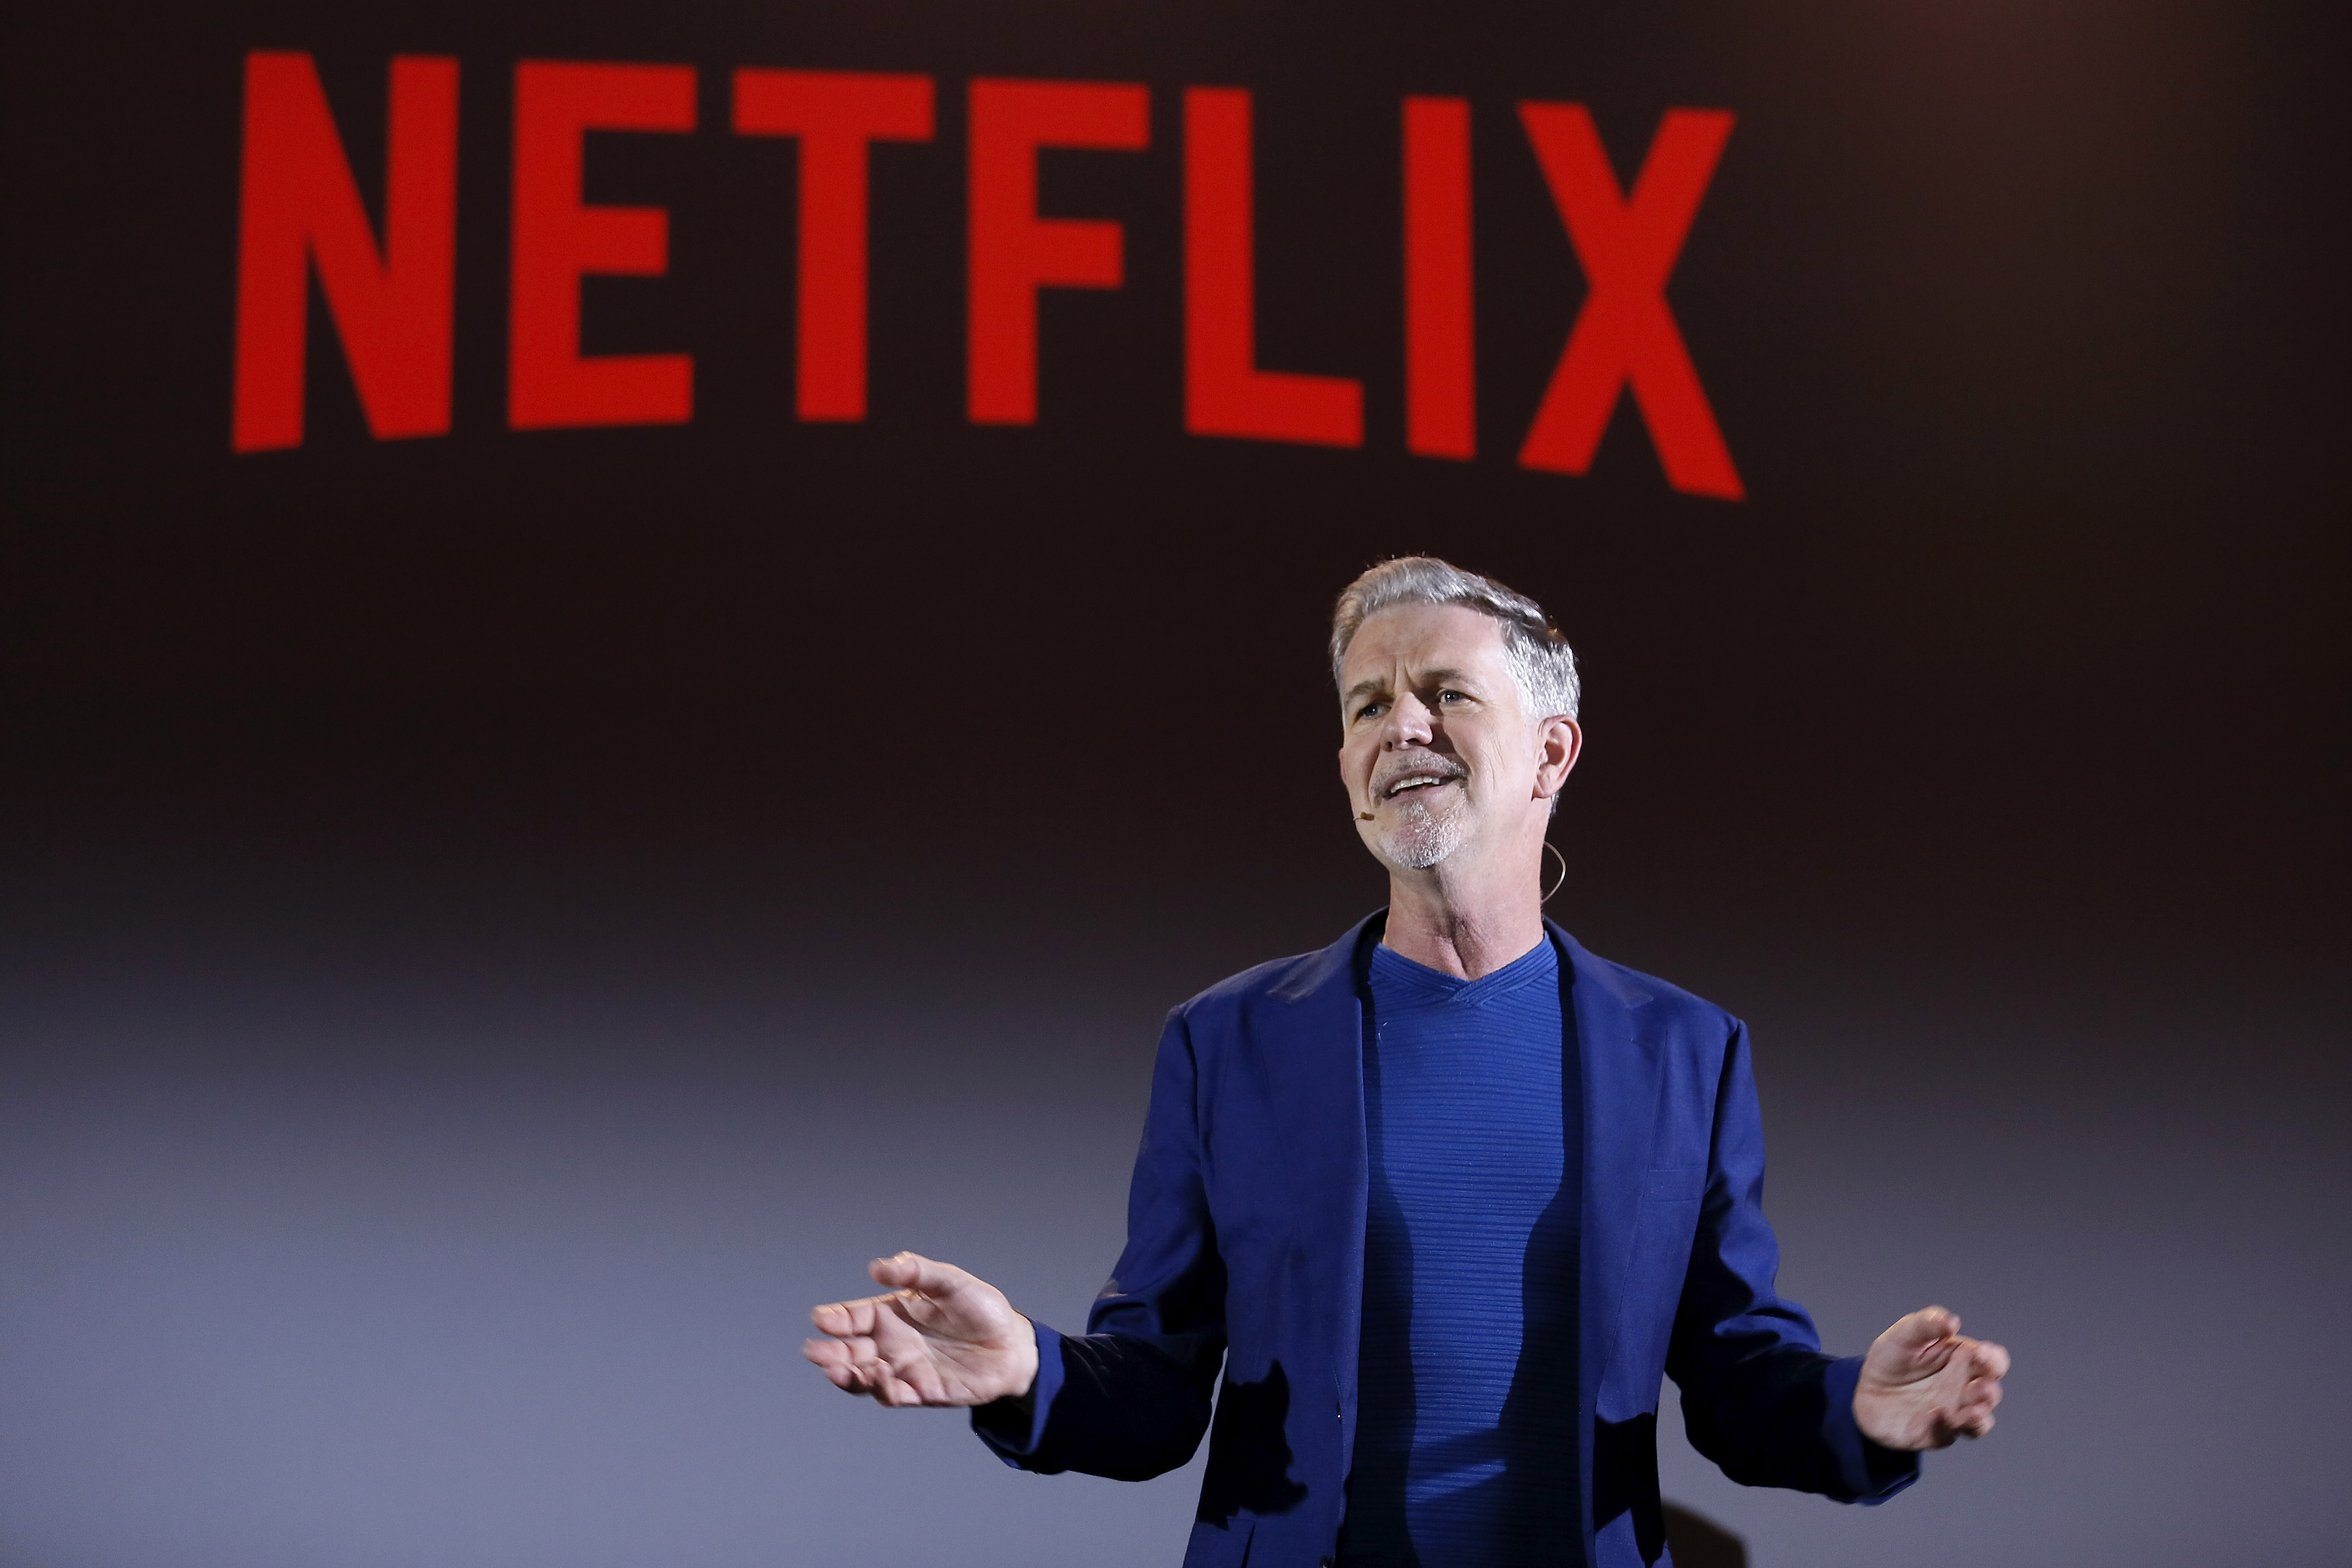 Netflix: See What's Next '18